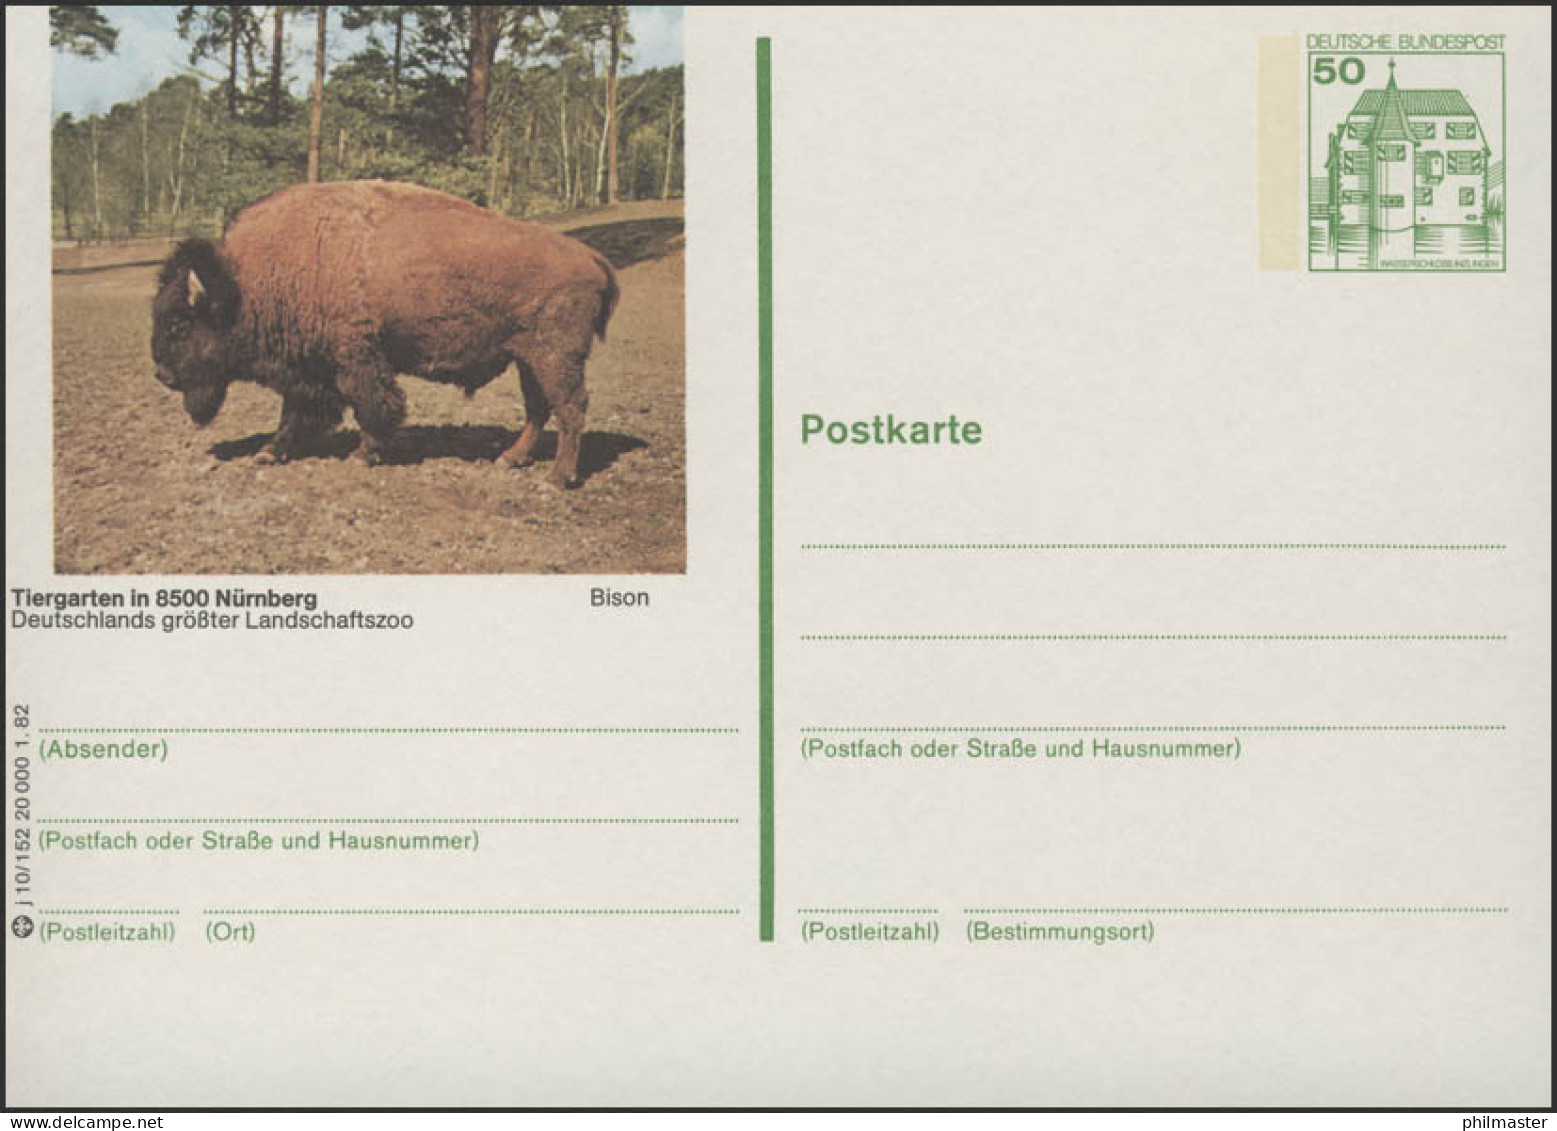 P134-j10/152 8500 Nürnberg - Tiergarten: Bison ** - Bildpostkarten - Ungebraucht